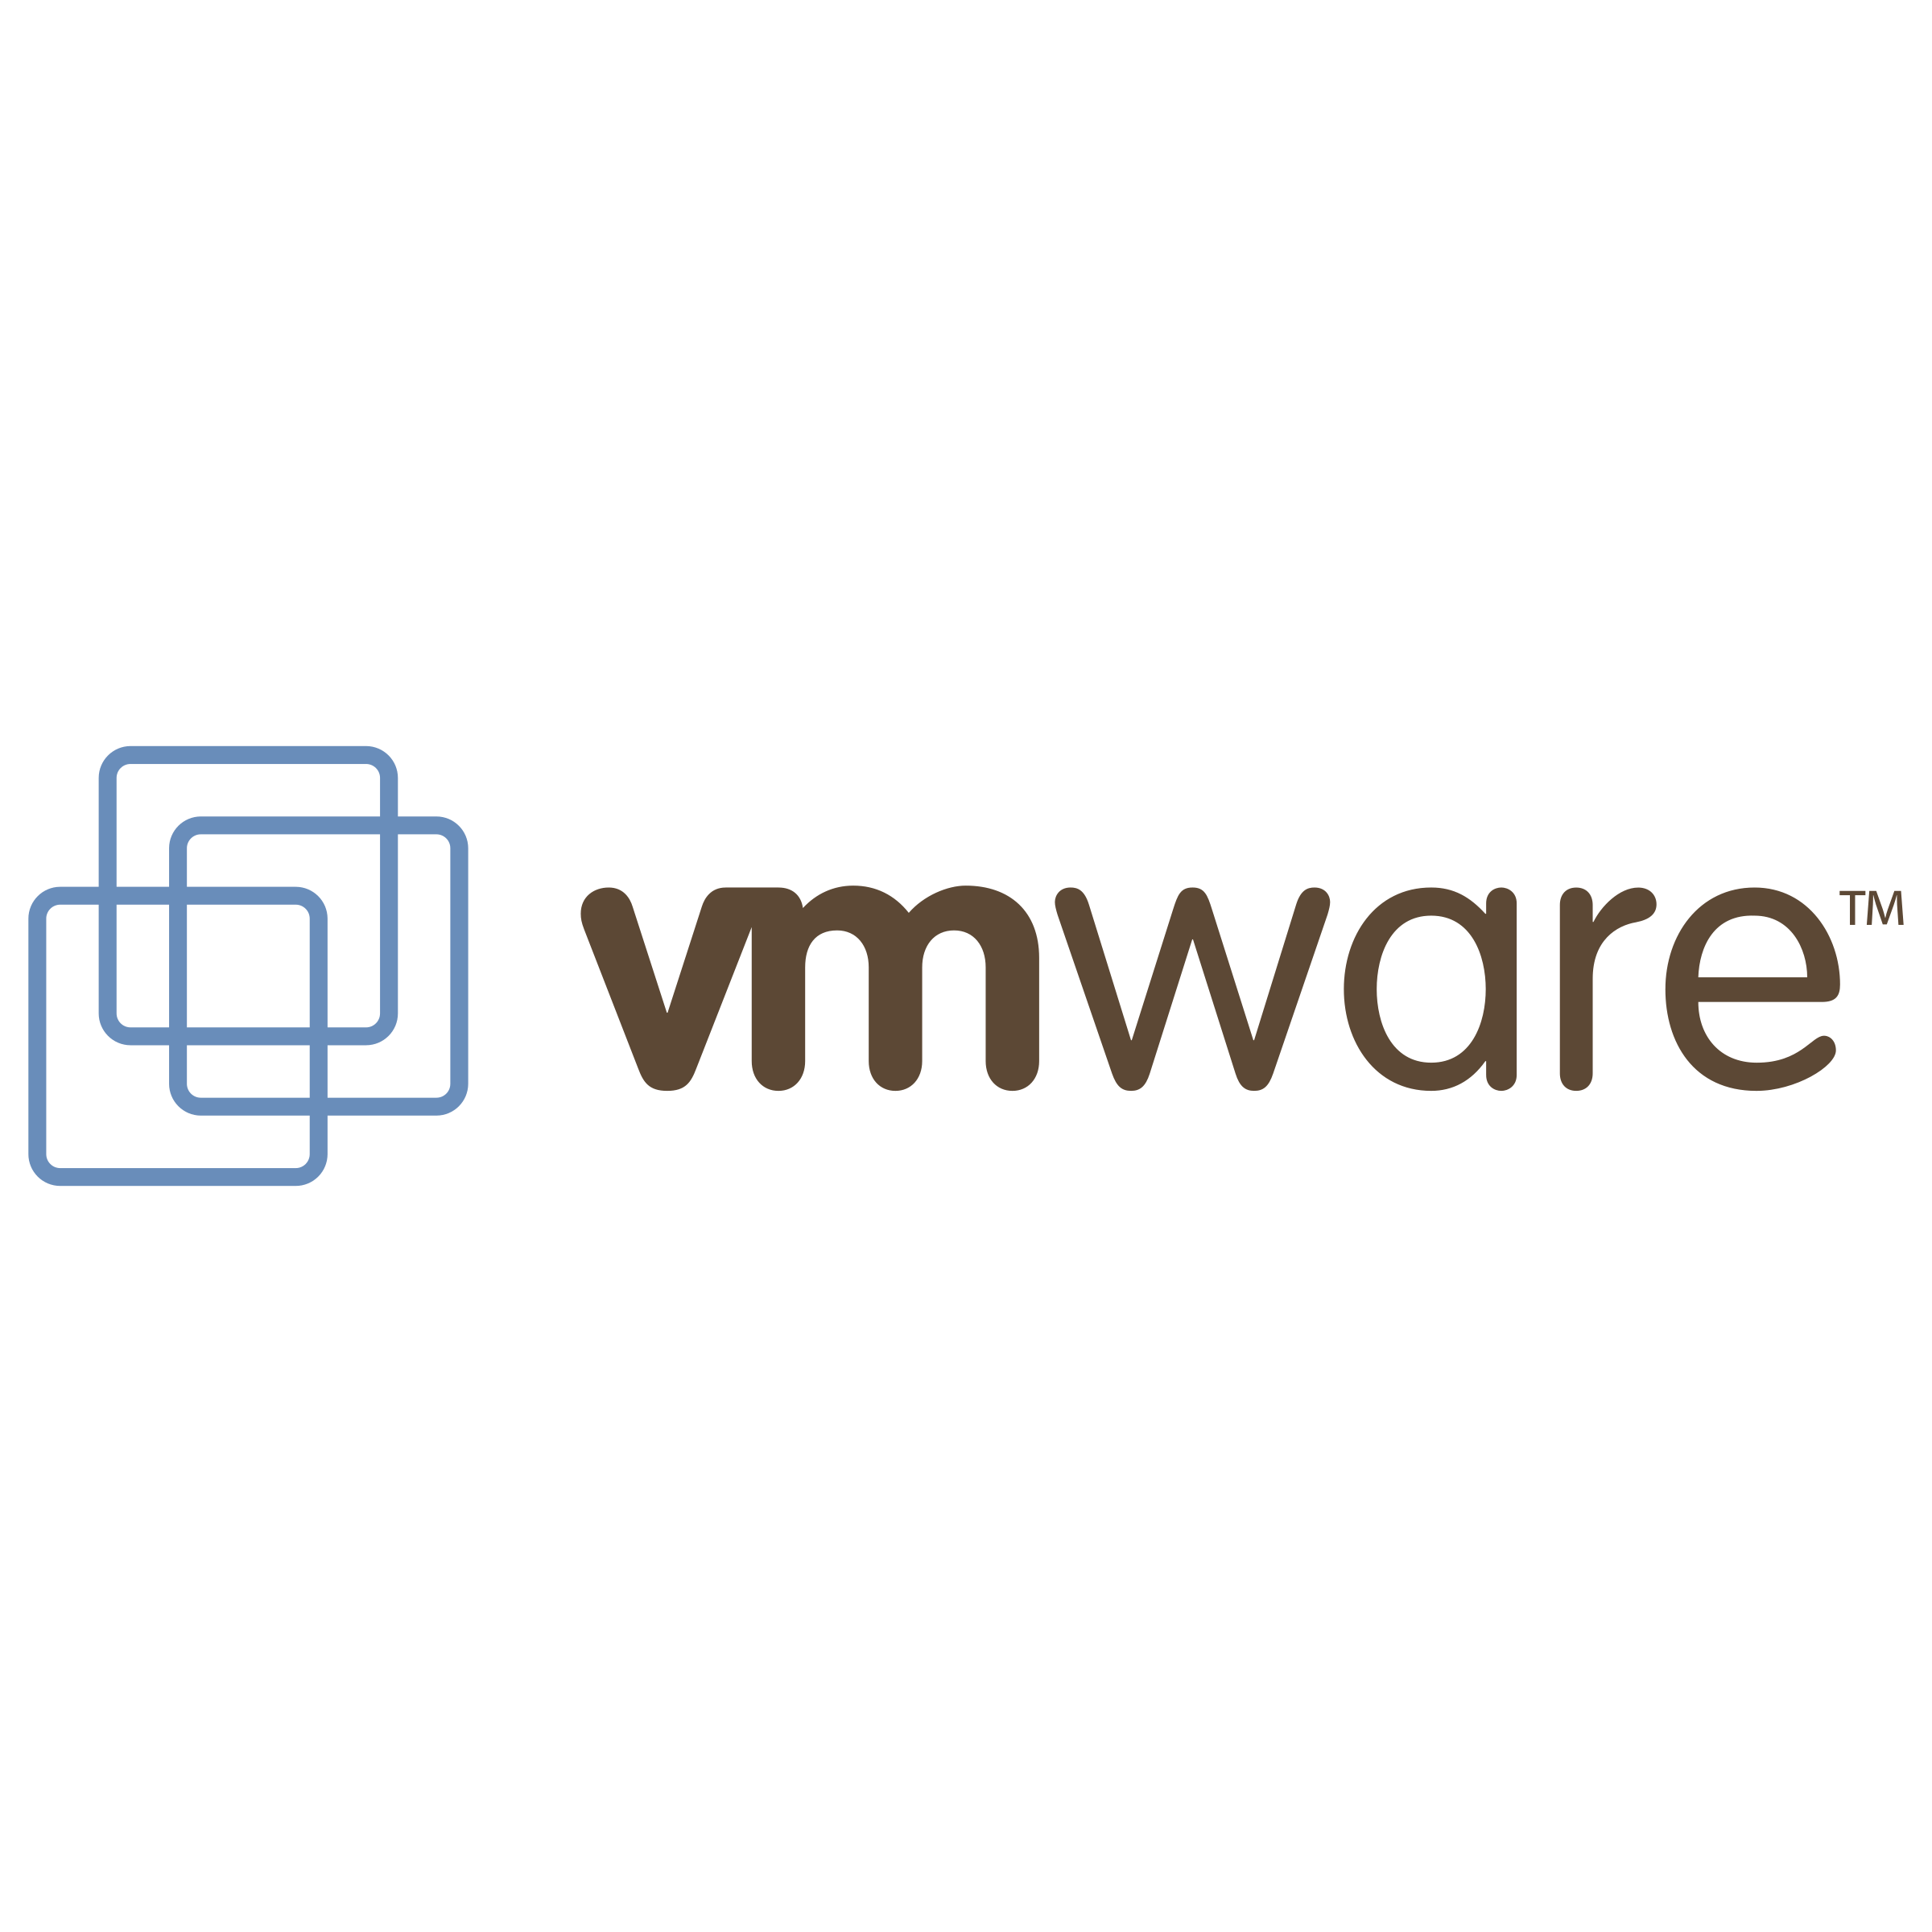 Vmare Logo - VMware Logo PNG Transparent & SVG Vector